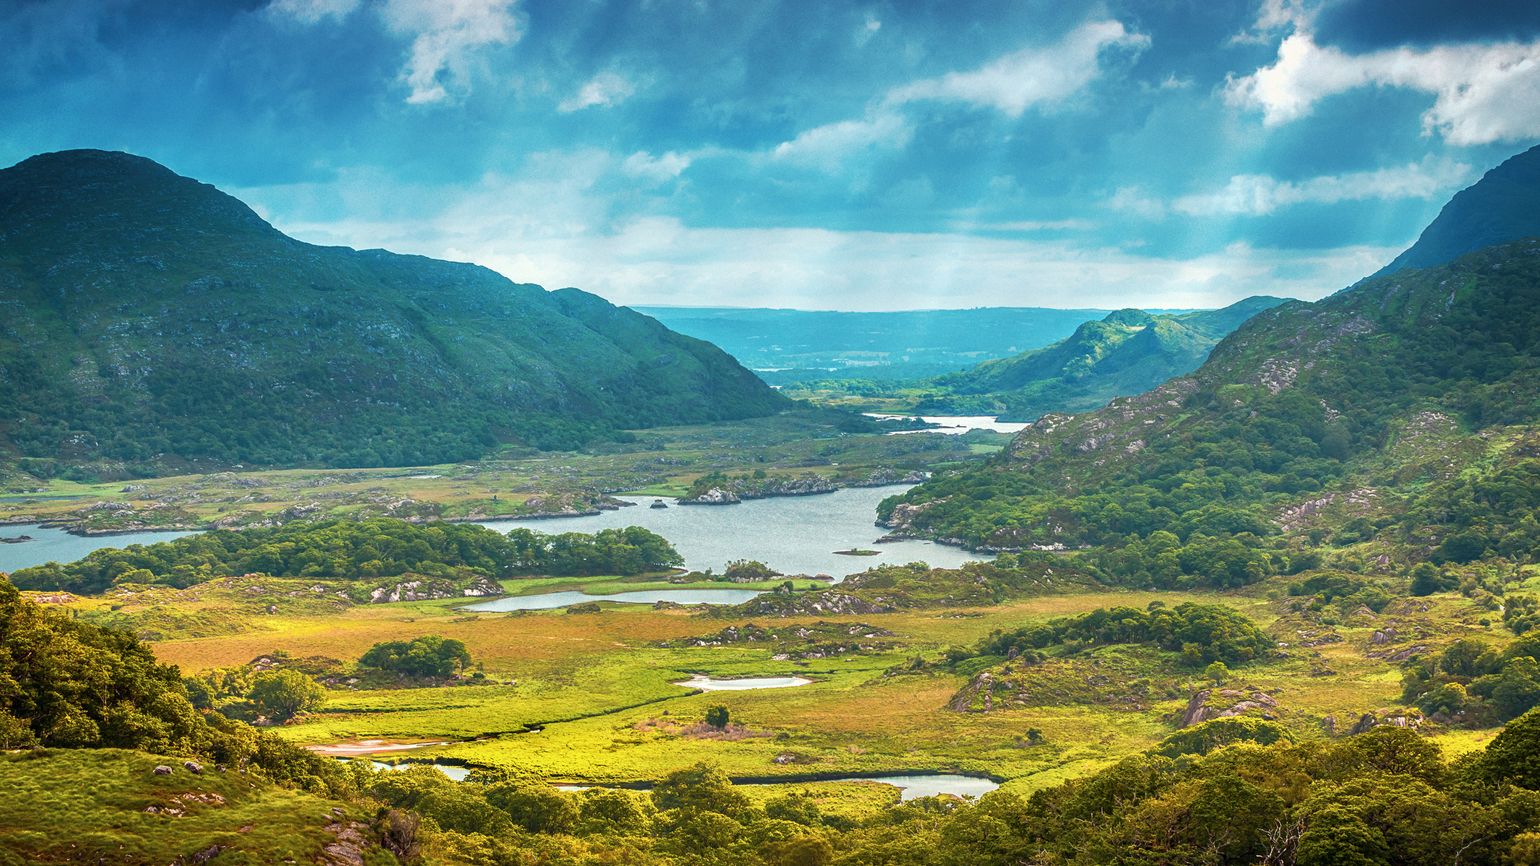 Gorgeous landscape in Ireland